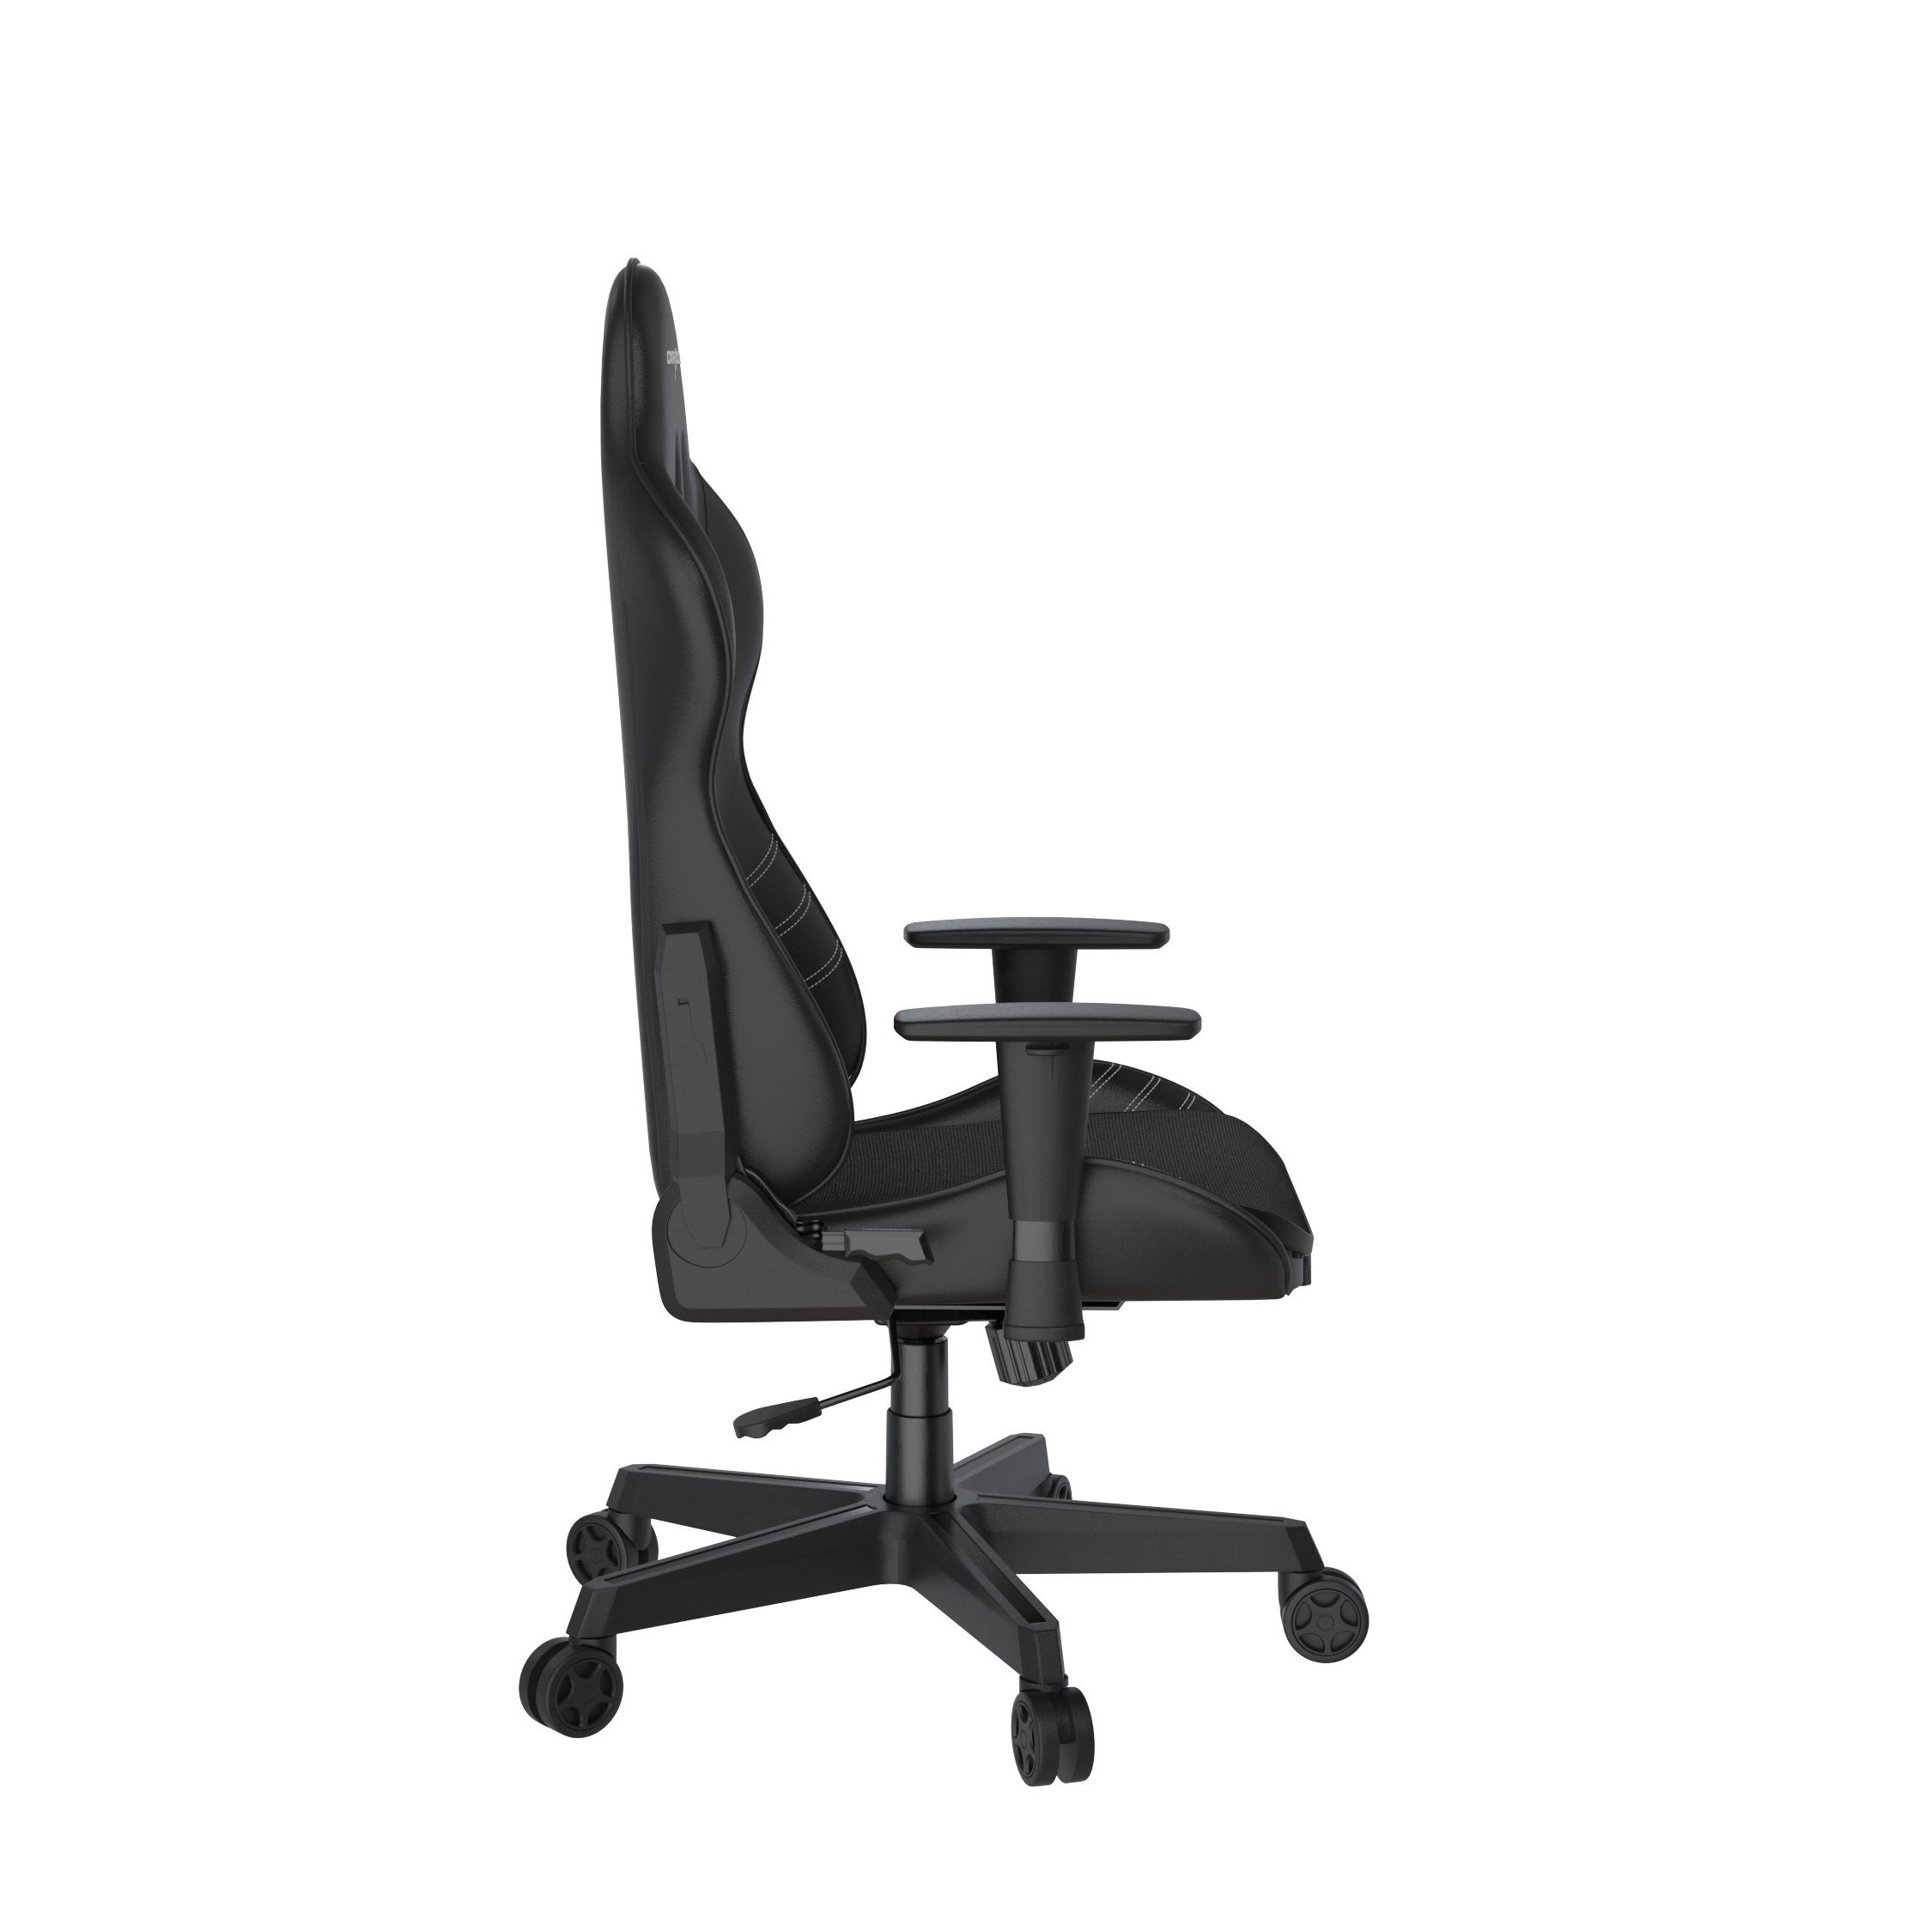 Геймерское кресло DXRacer OH/G8000/MS/N